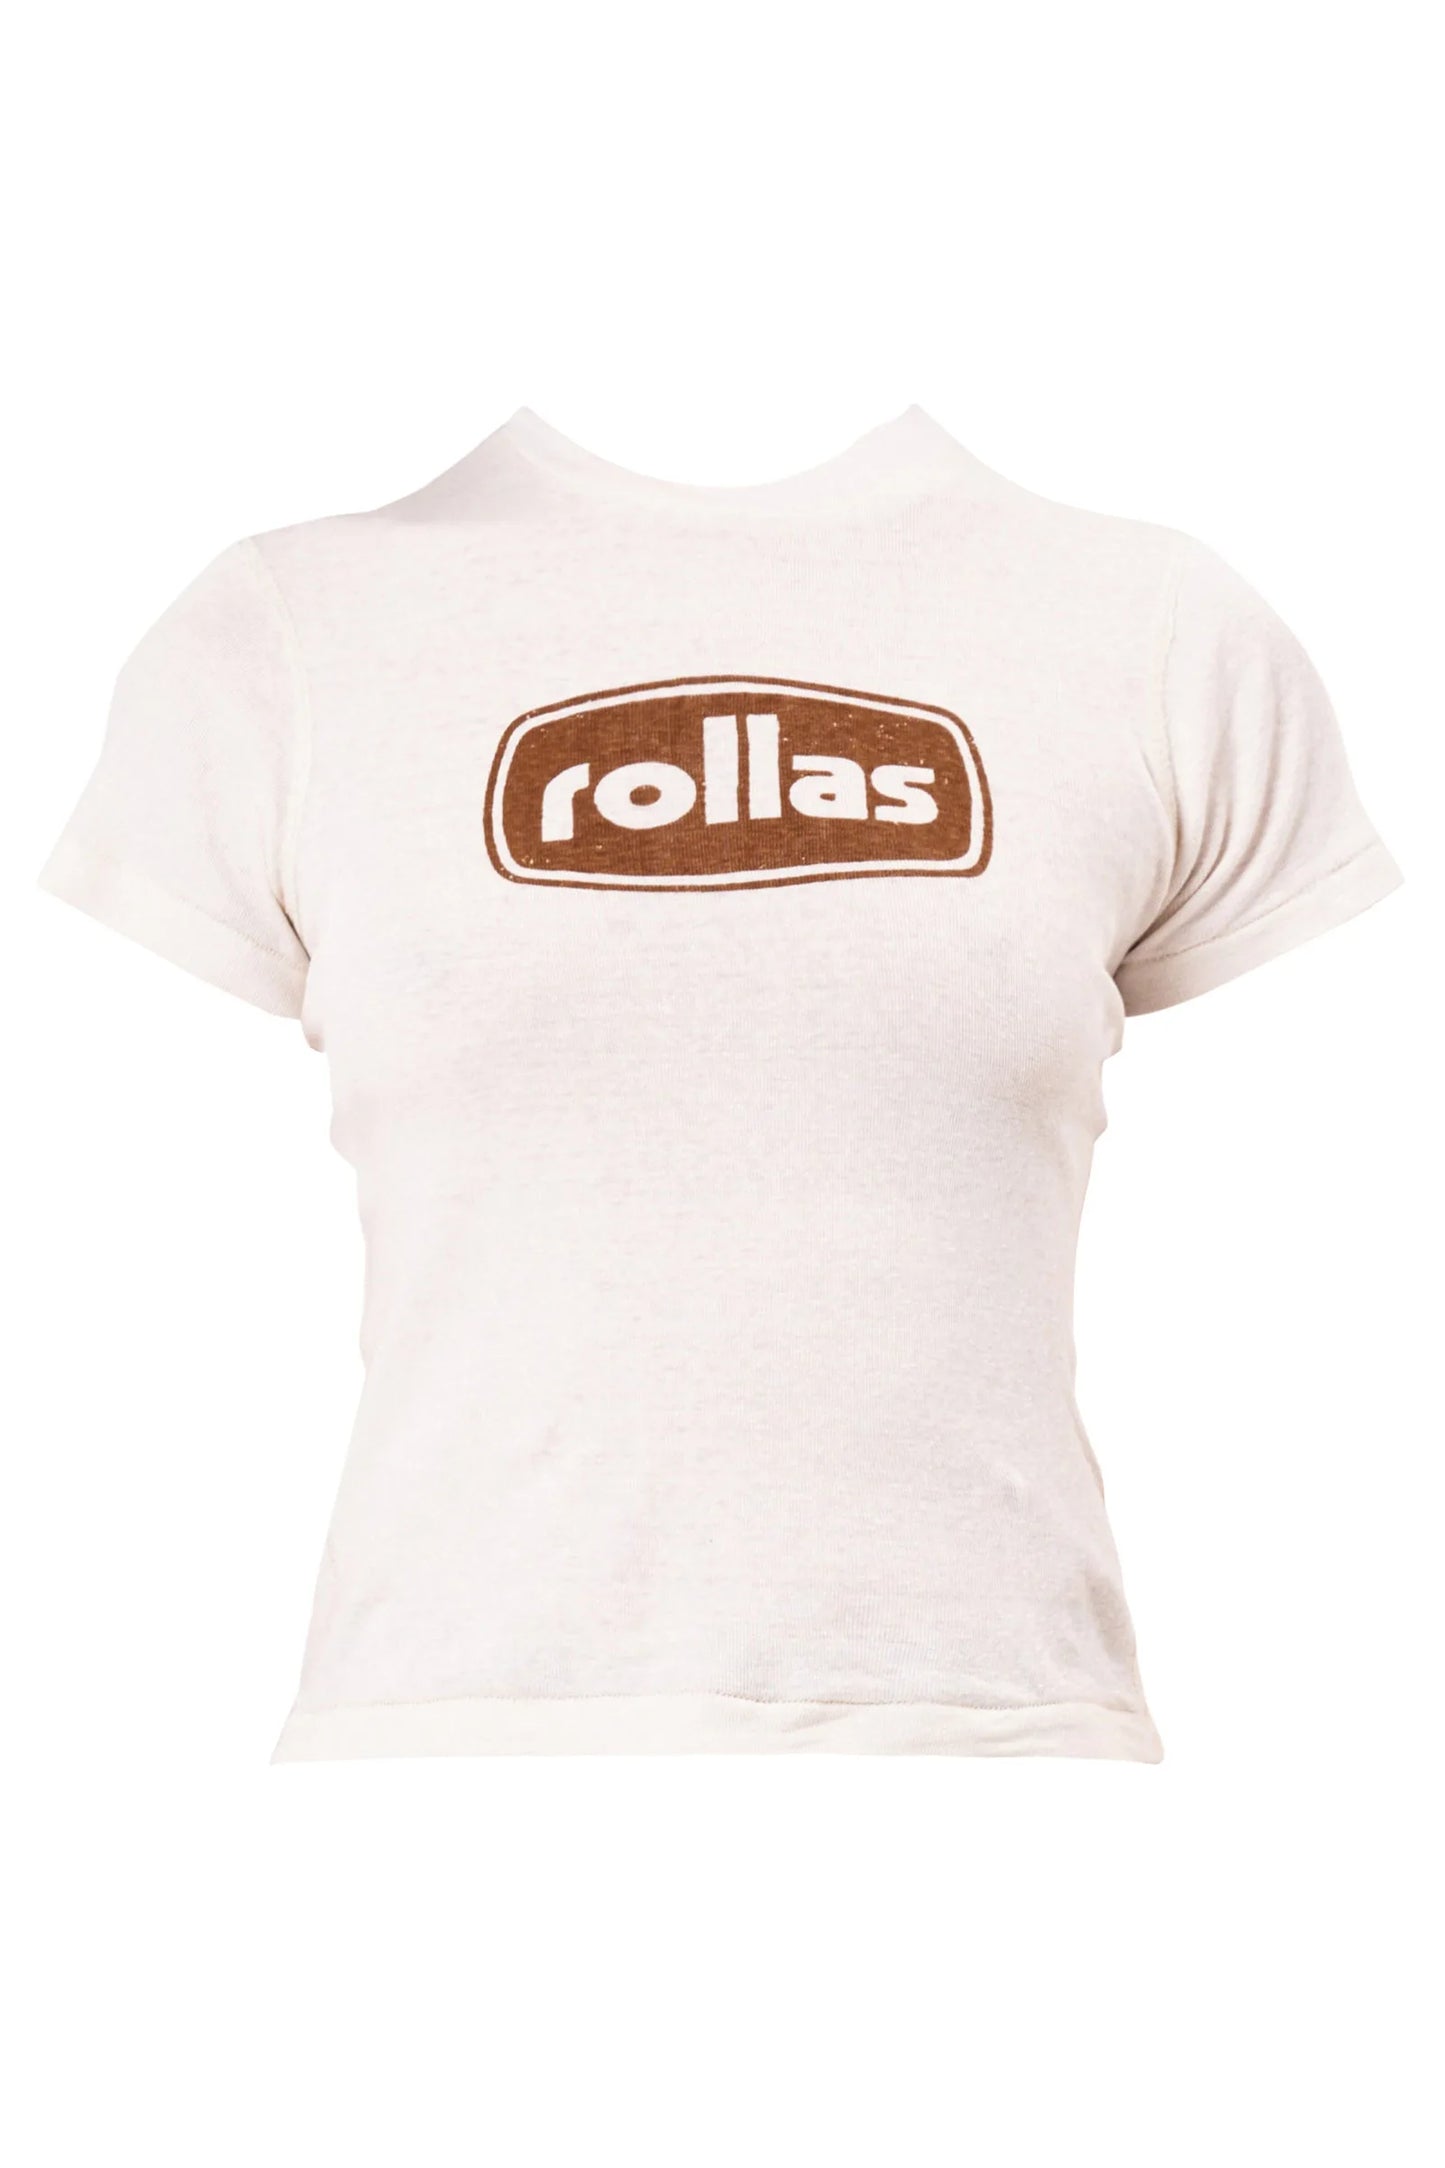 ROLLA’S Classic Tee Station - Cream